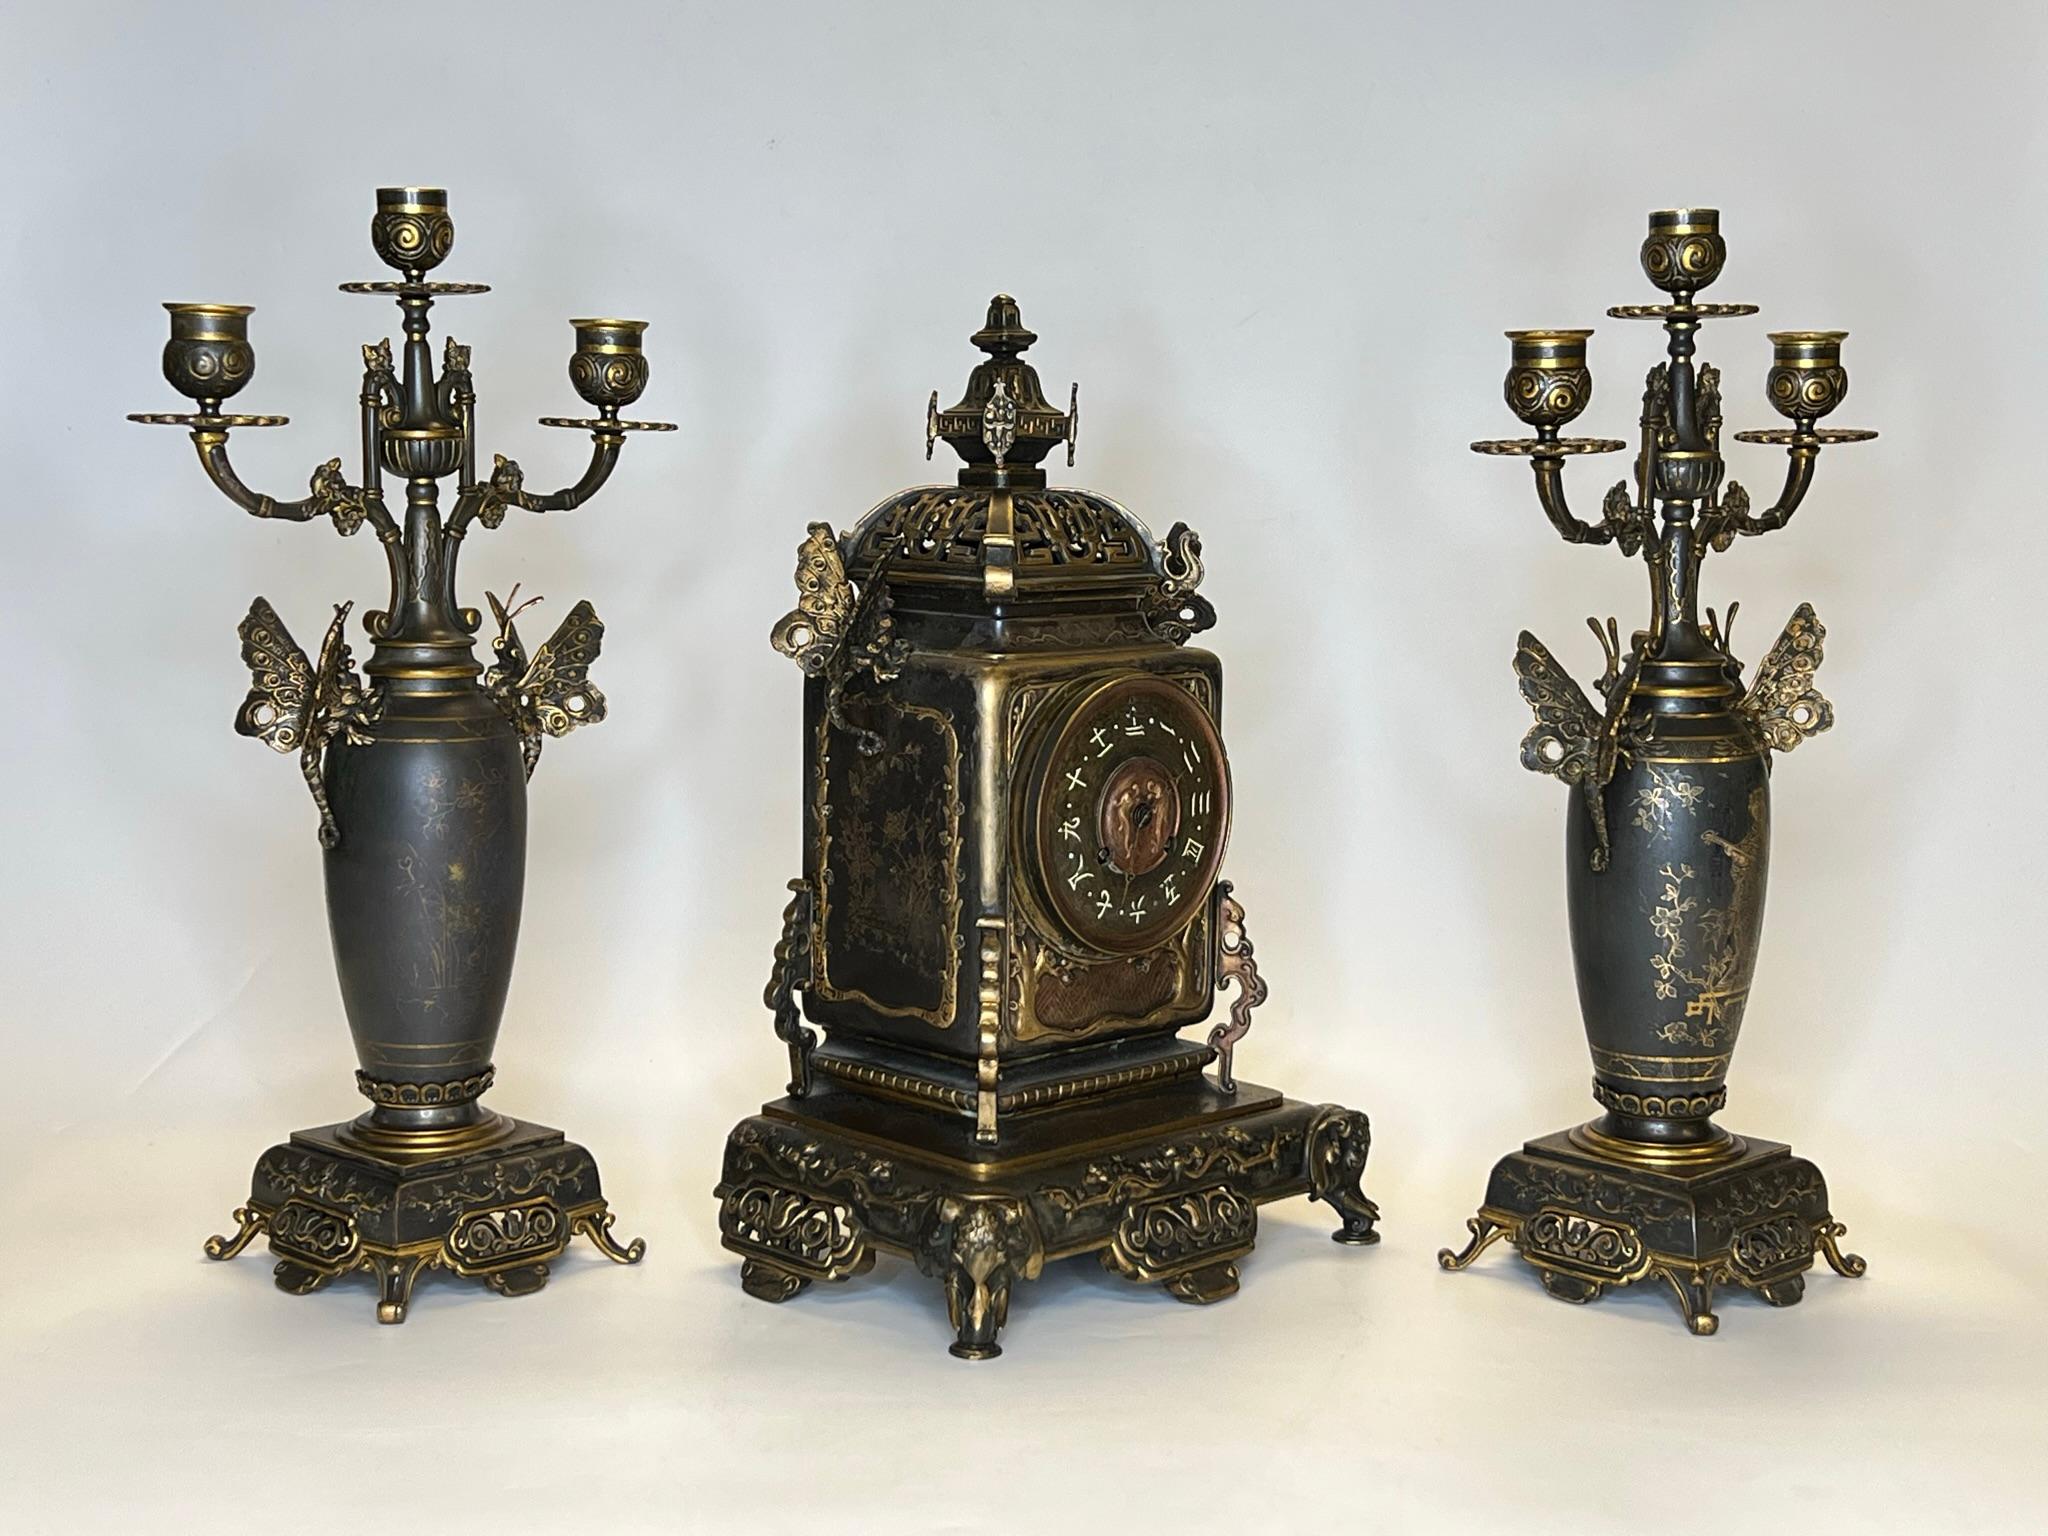 Gilt 19th Century French Japanese Style Bronze Mantel Clock and Candelabra Garniture